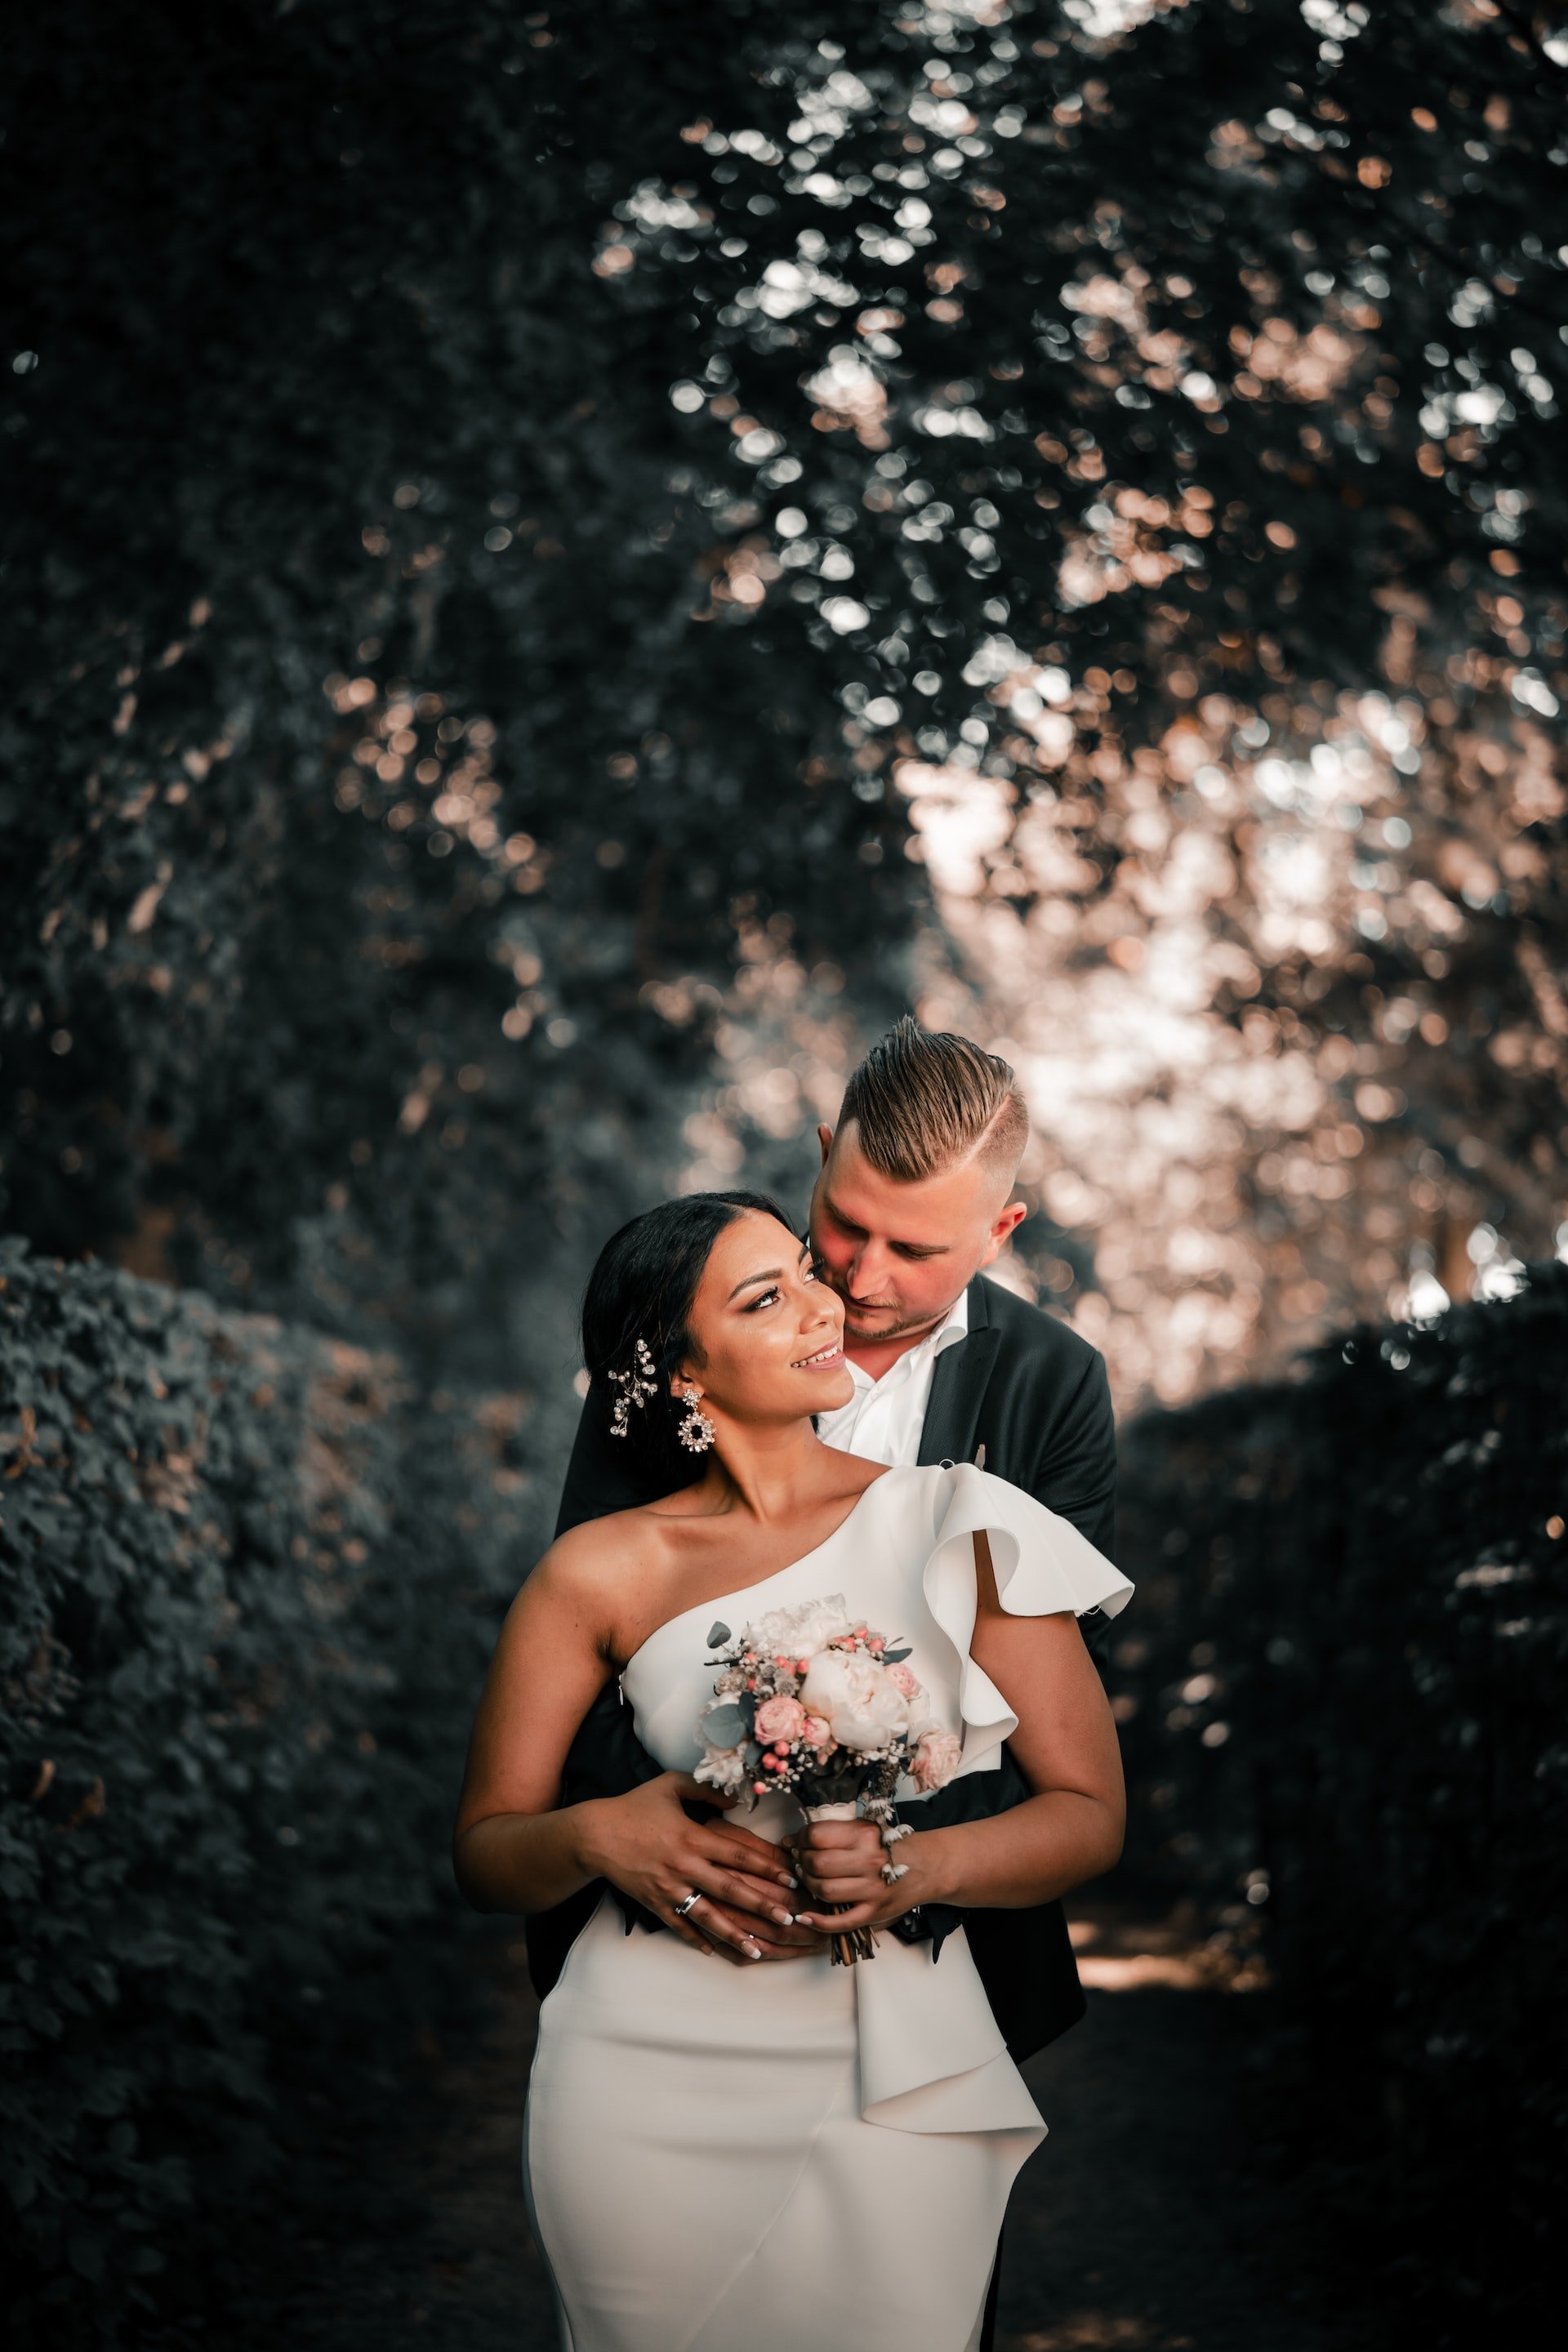 Pre Wedding Photoshoot Poses 2022 - Akshitphotography